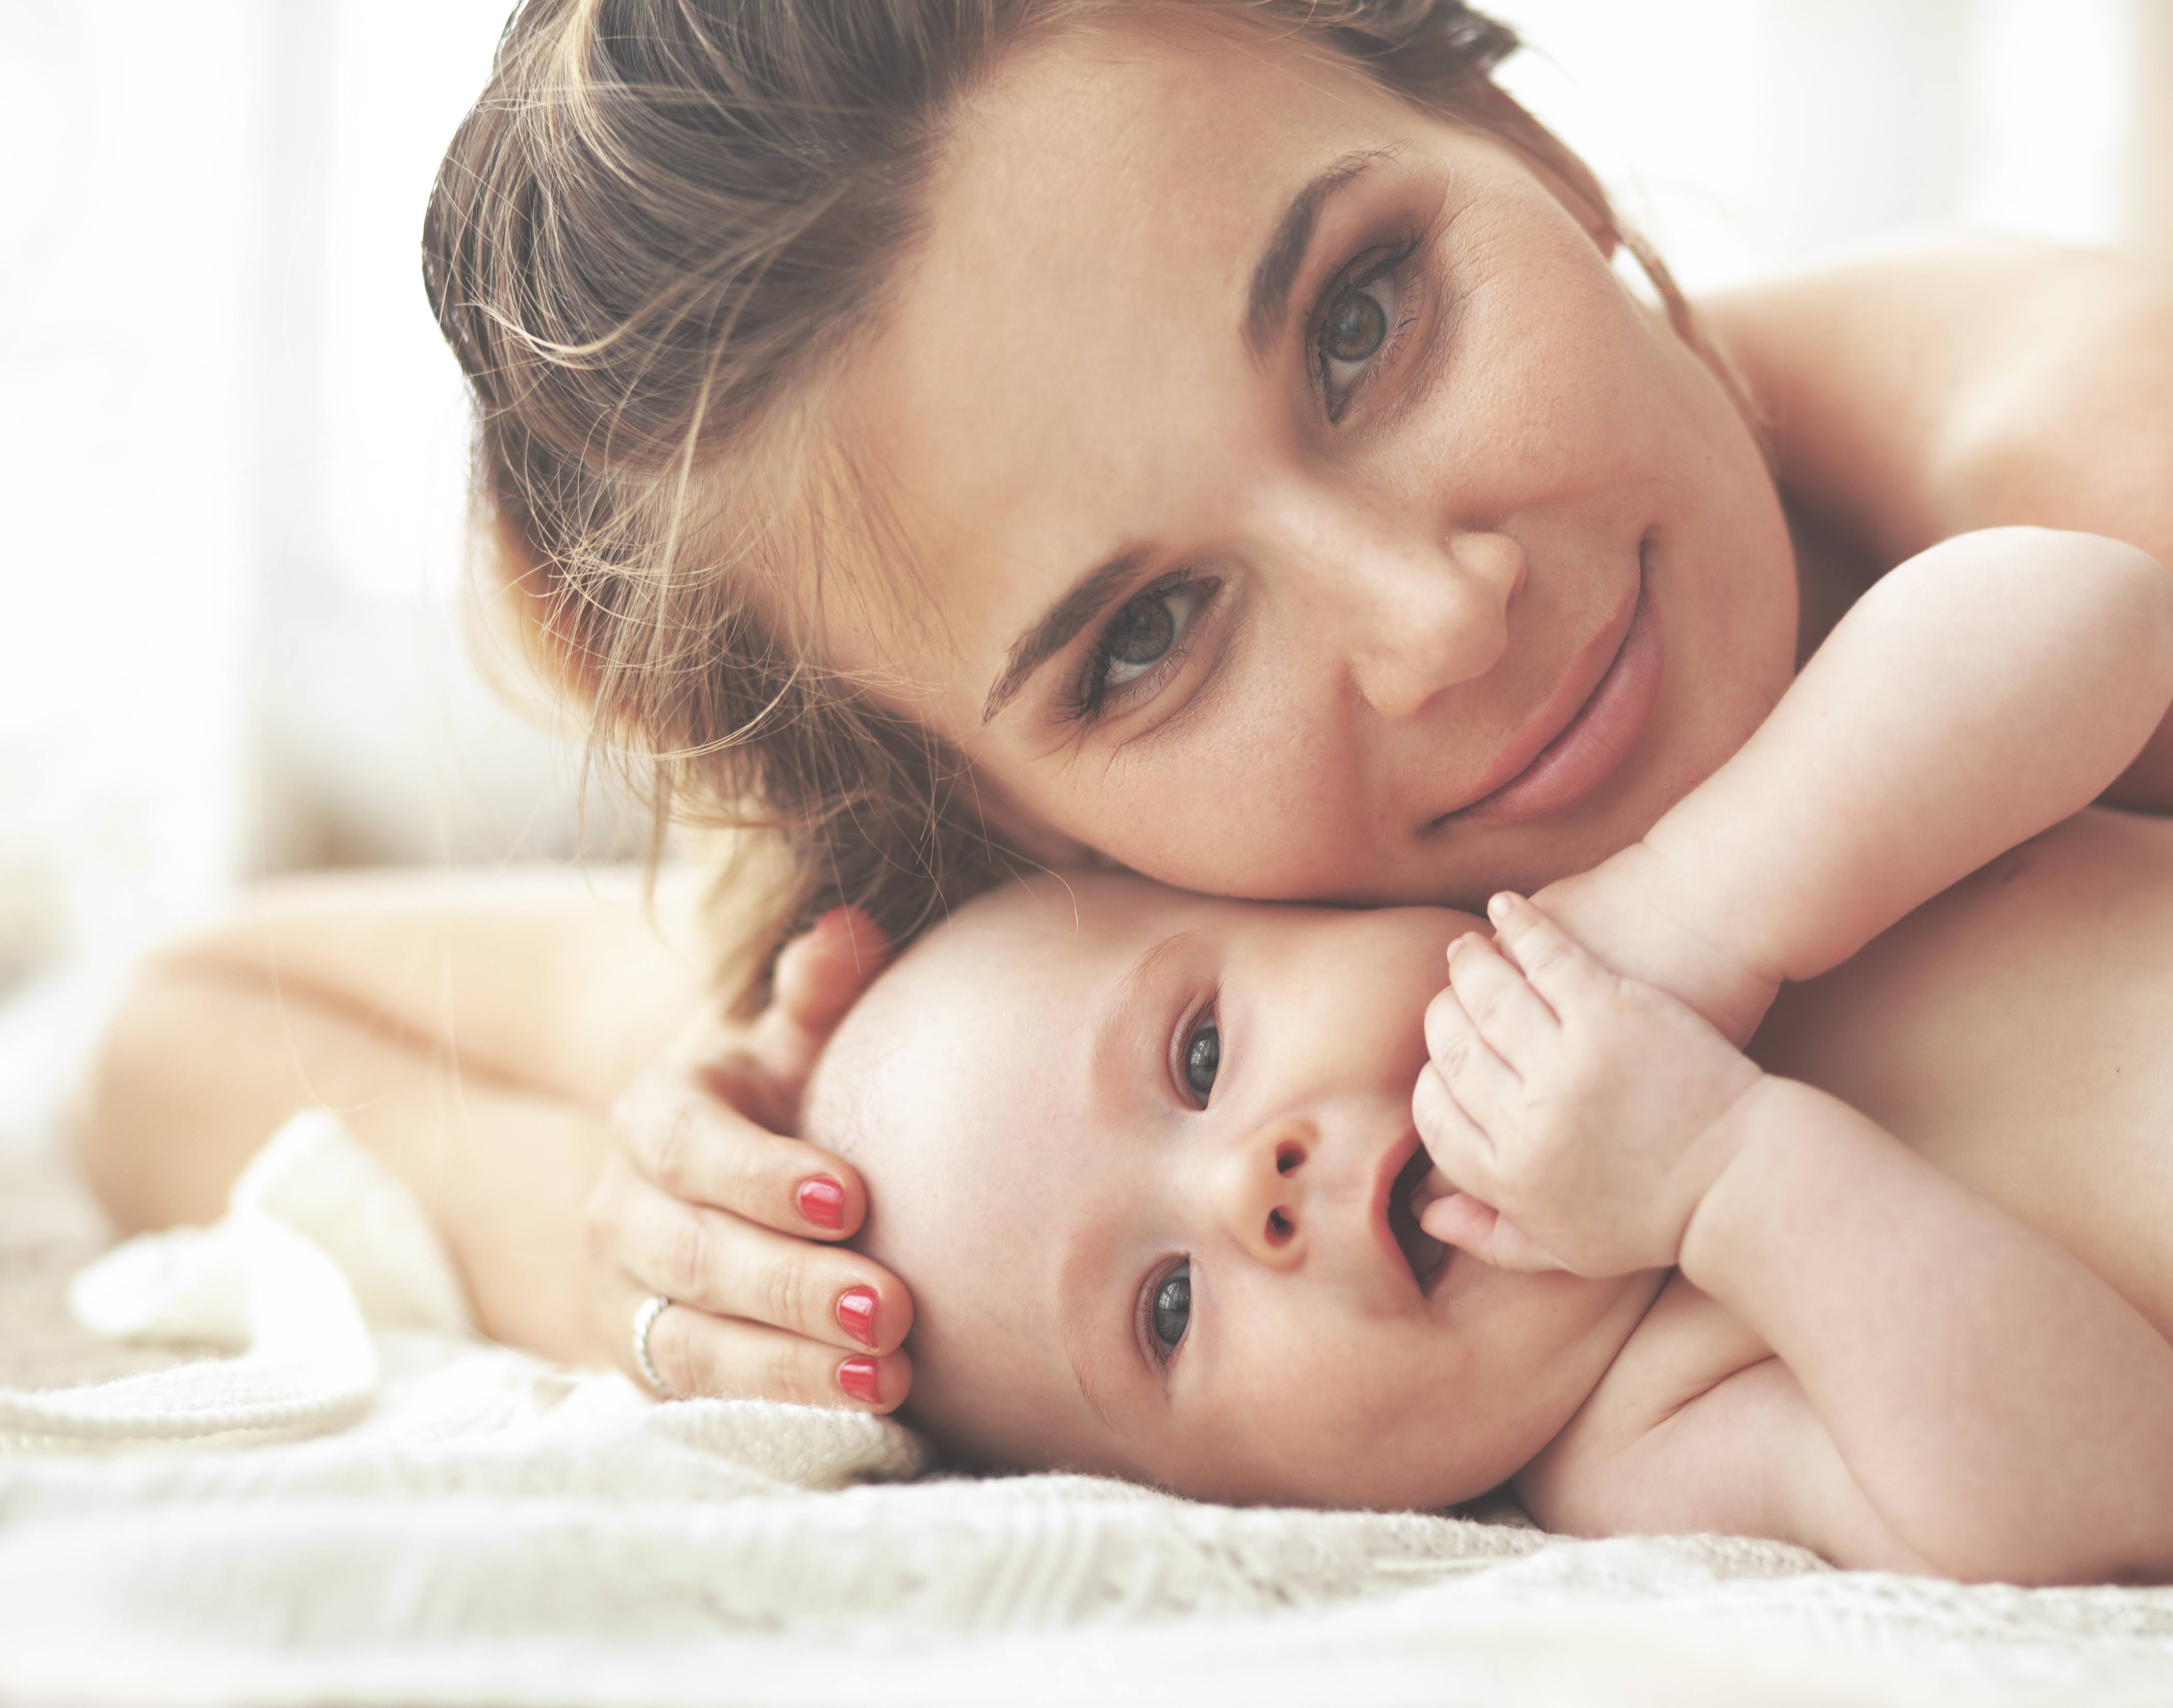 Женщина с младенцем фото